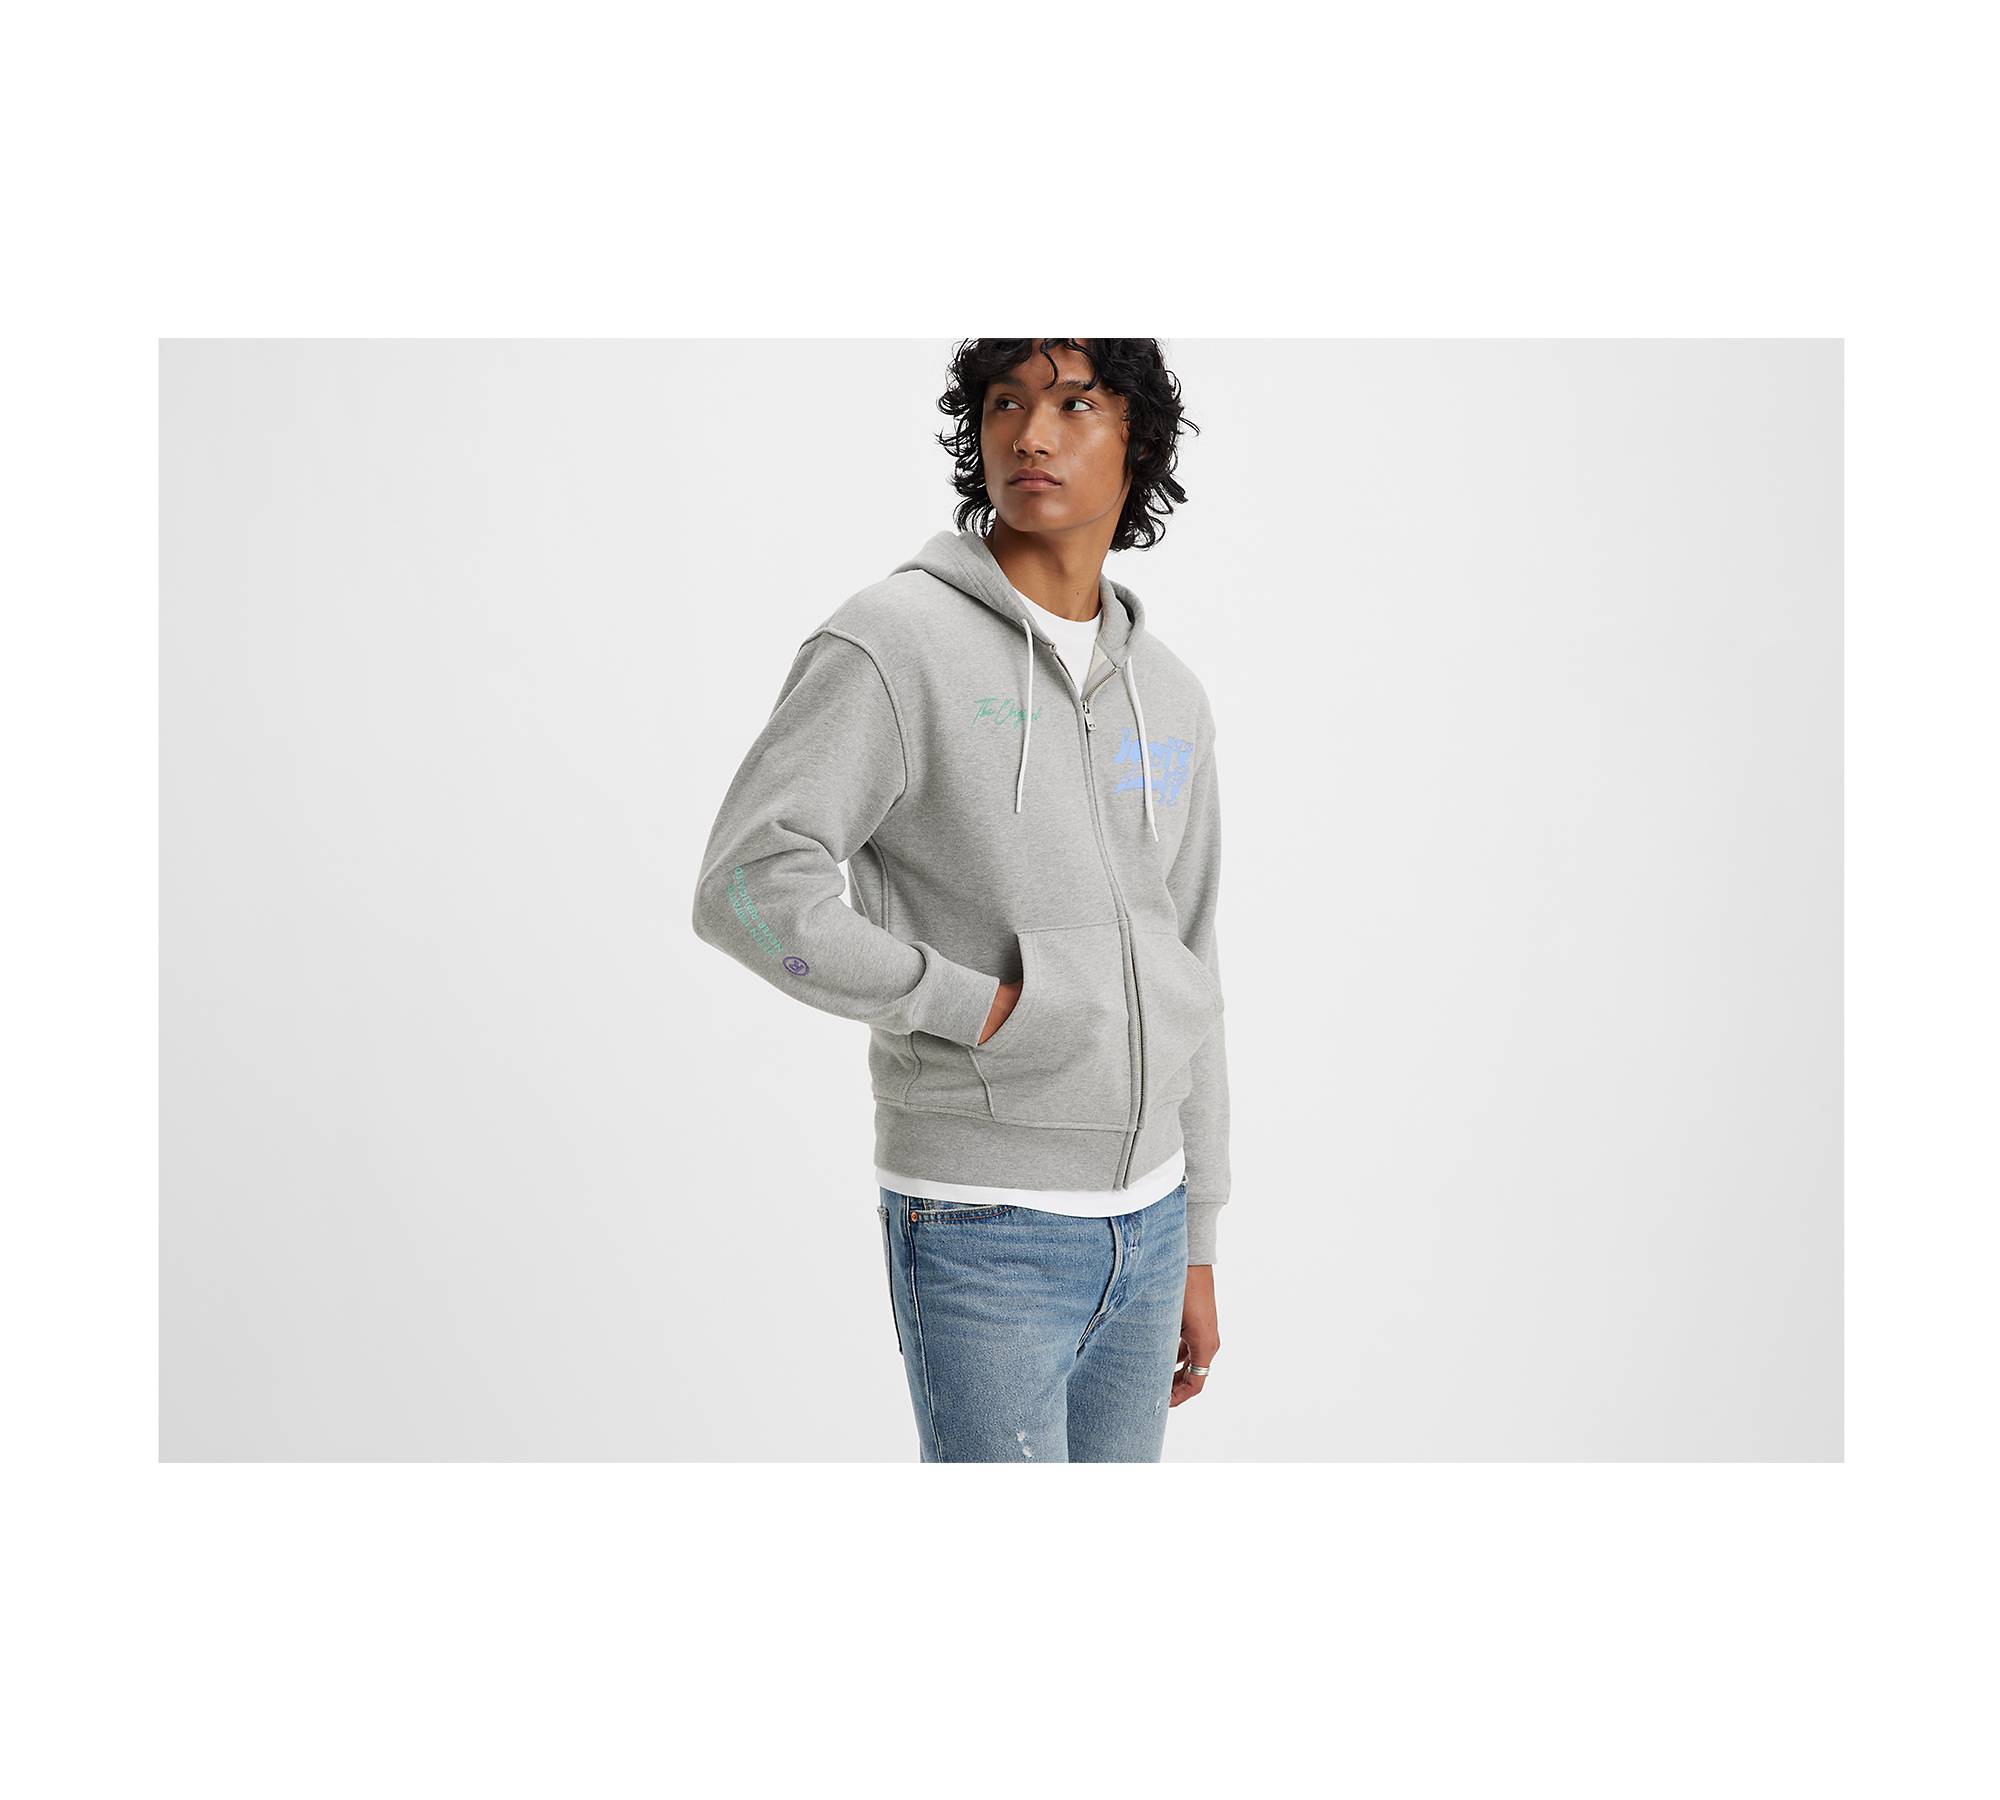 Mens Hoodies & Sweatshirts - Graphic & Zipped